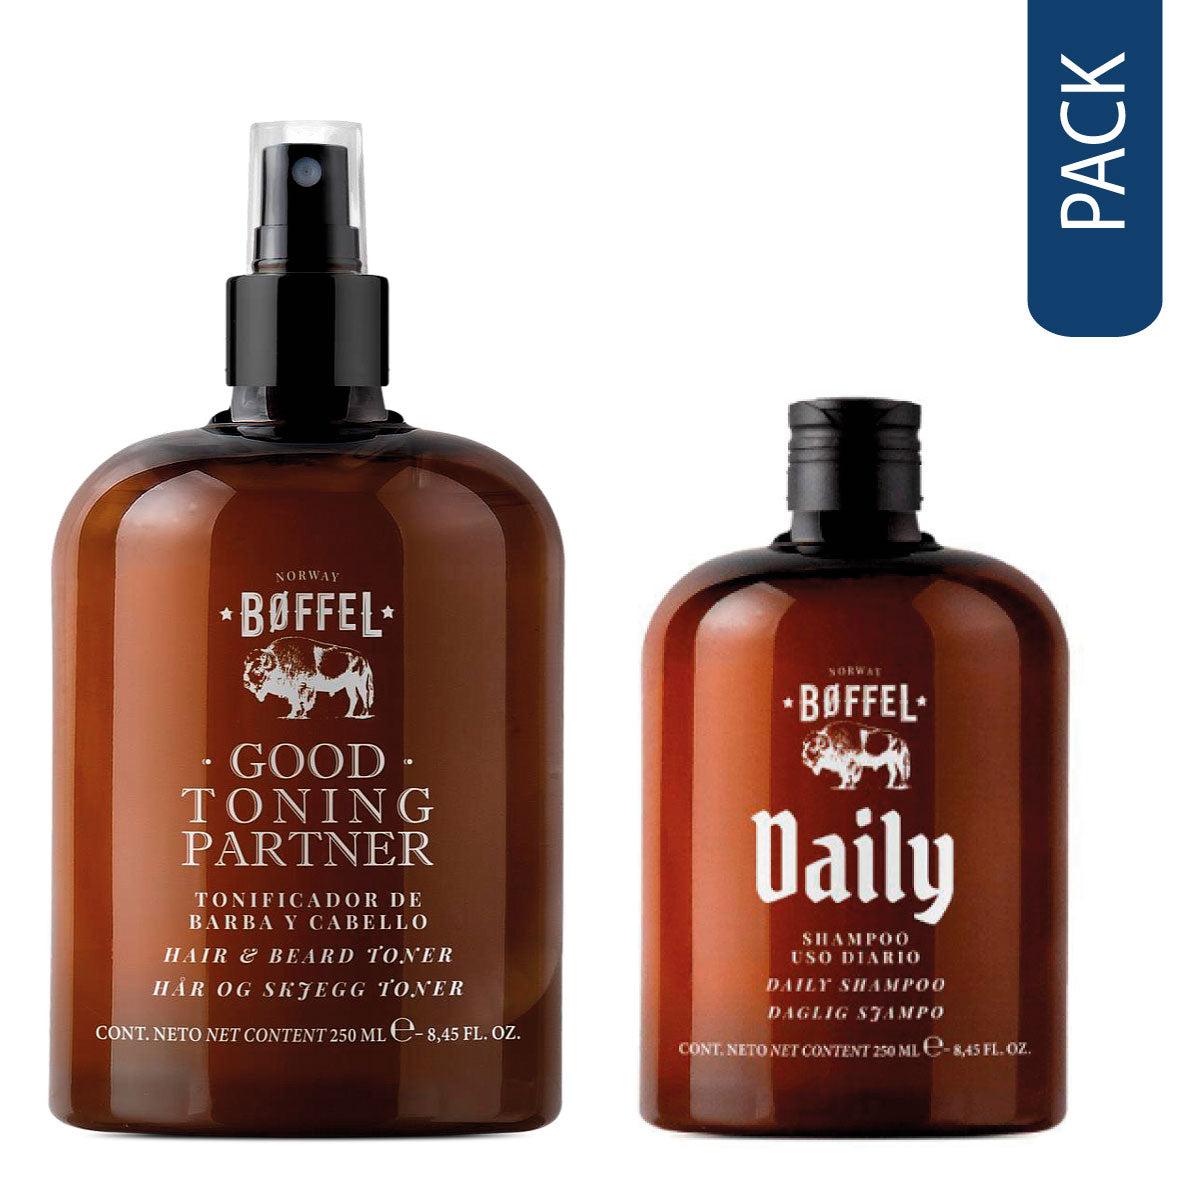 Pack de boffel hair and beard toner y shampoo para uso diario 250ml [Openbox]